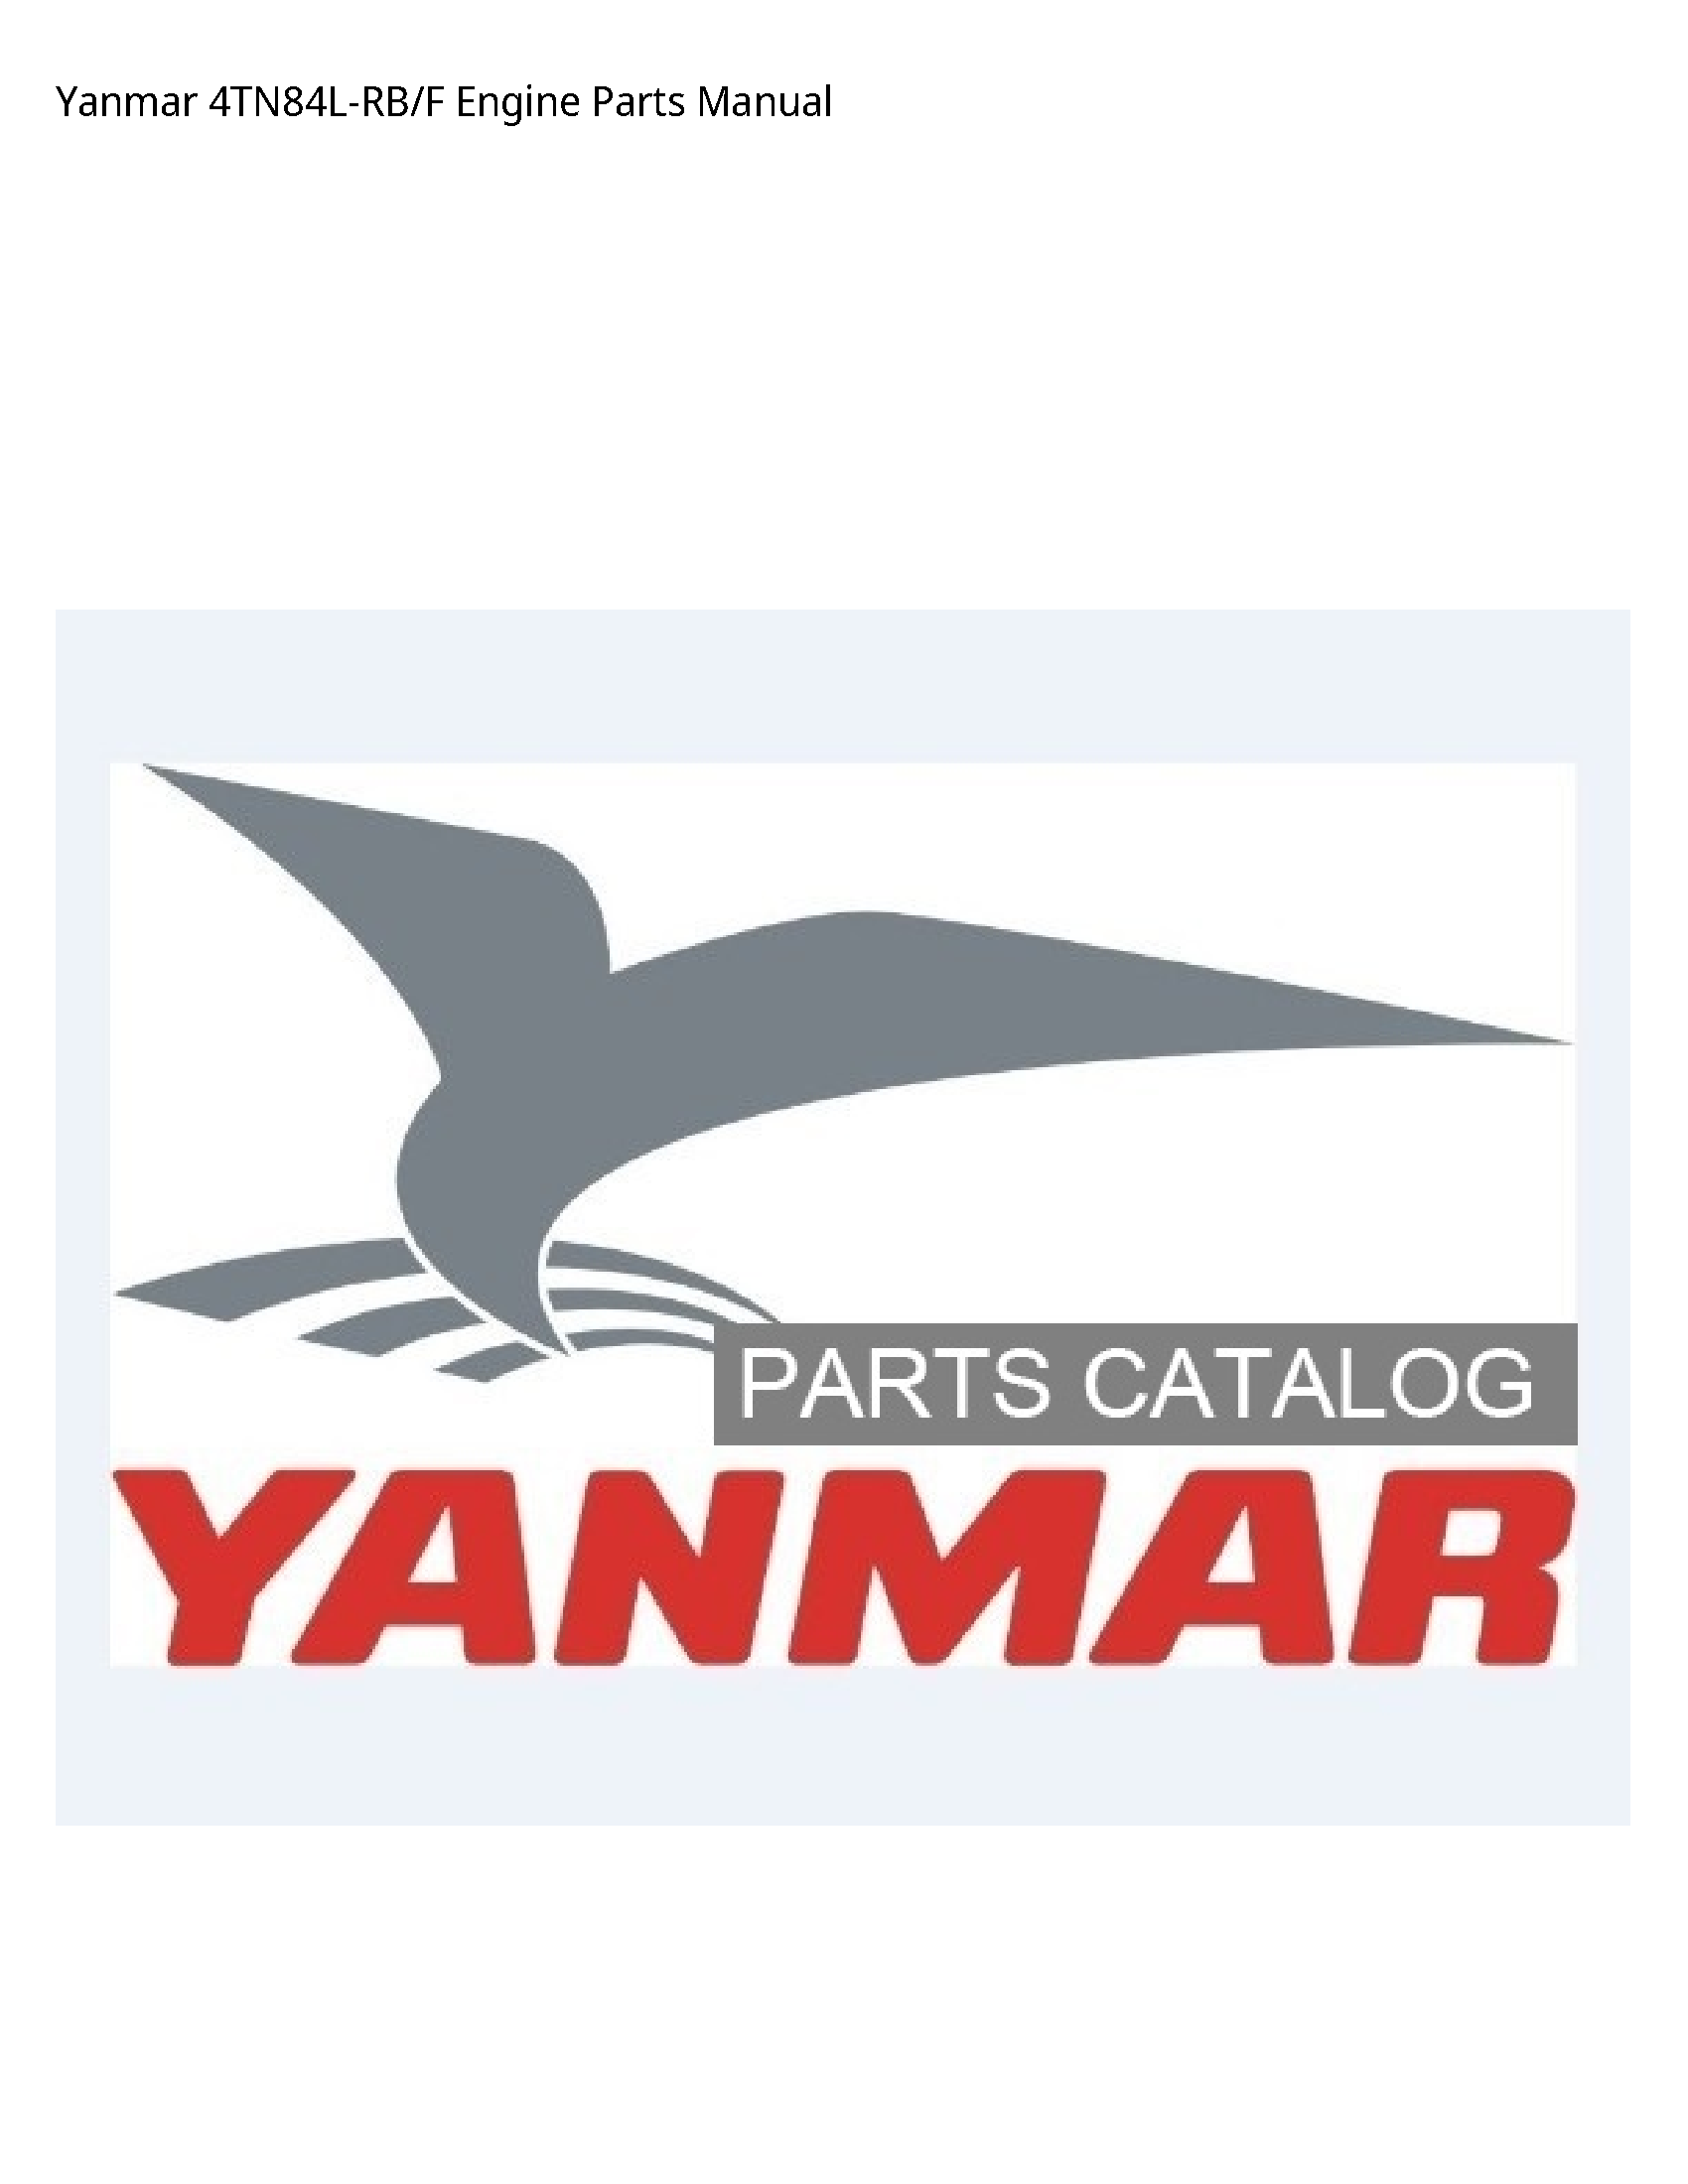 Yanmar 4TN84L-RB Engine Parts manual